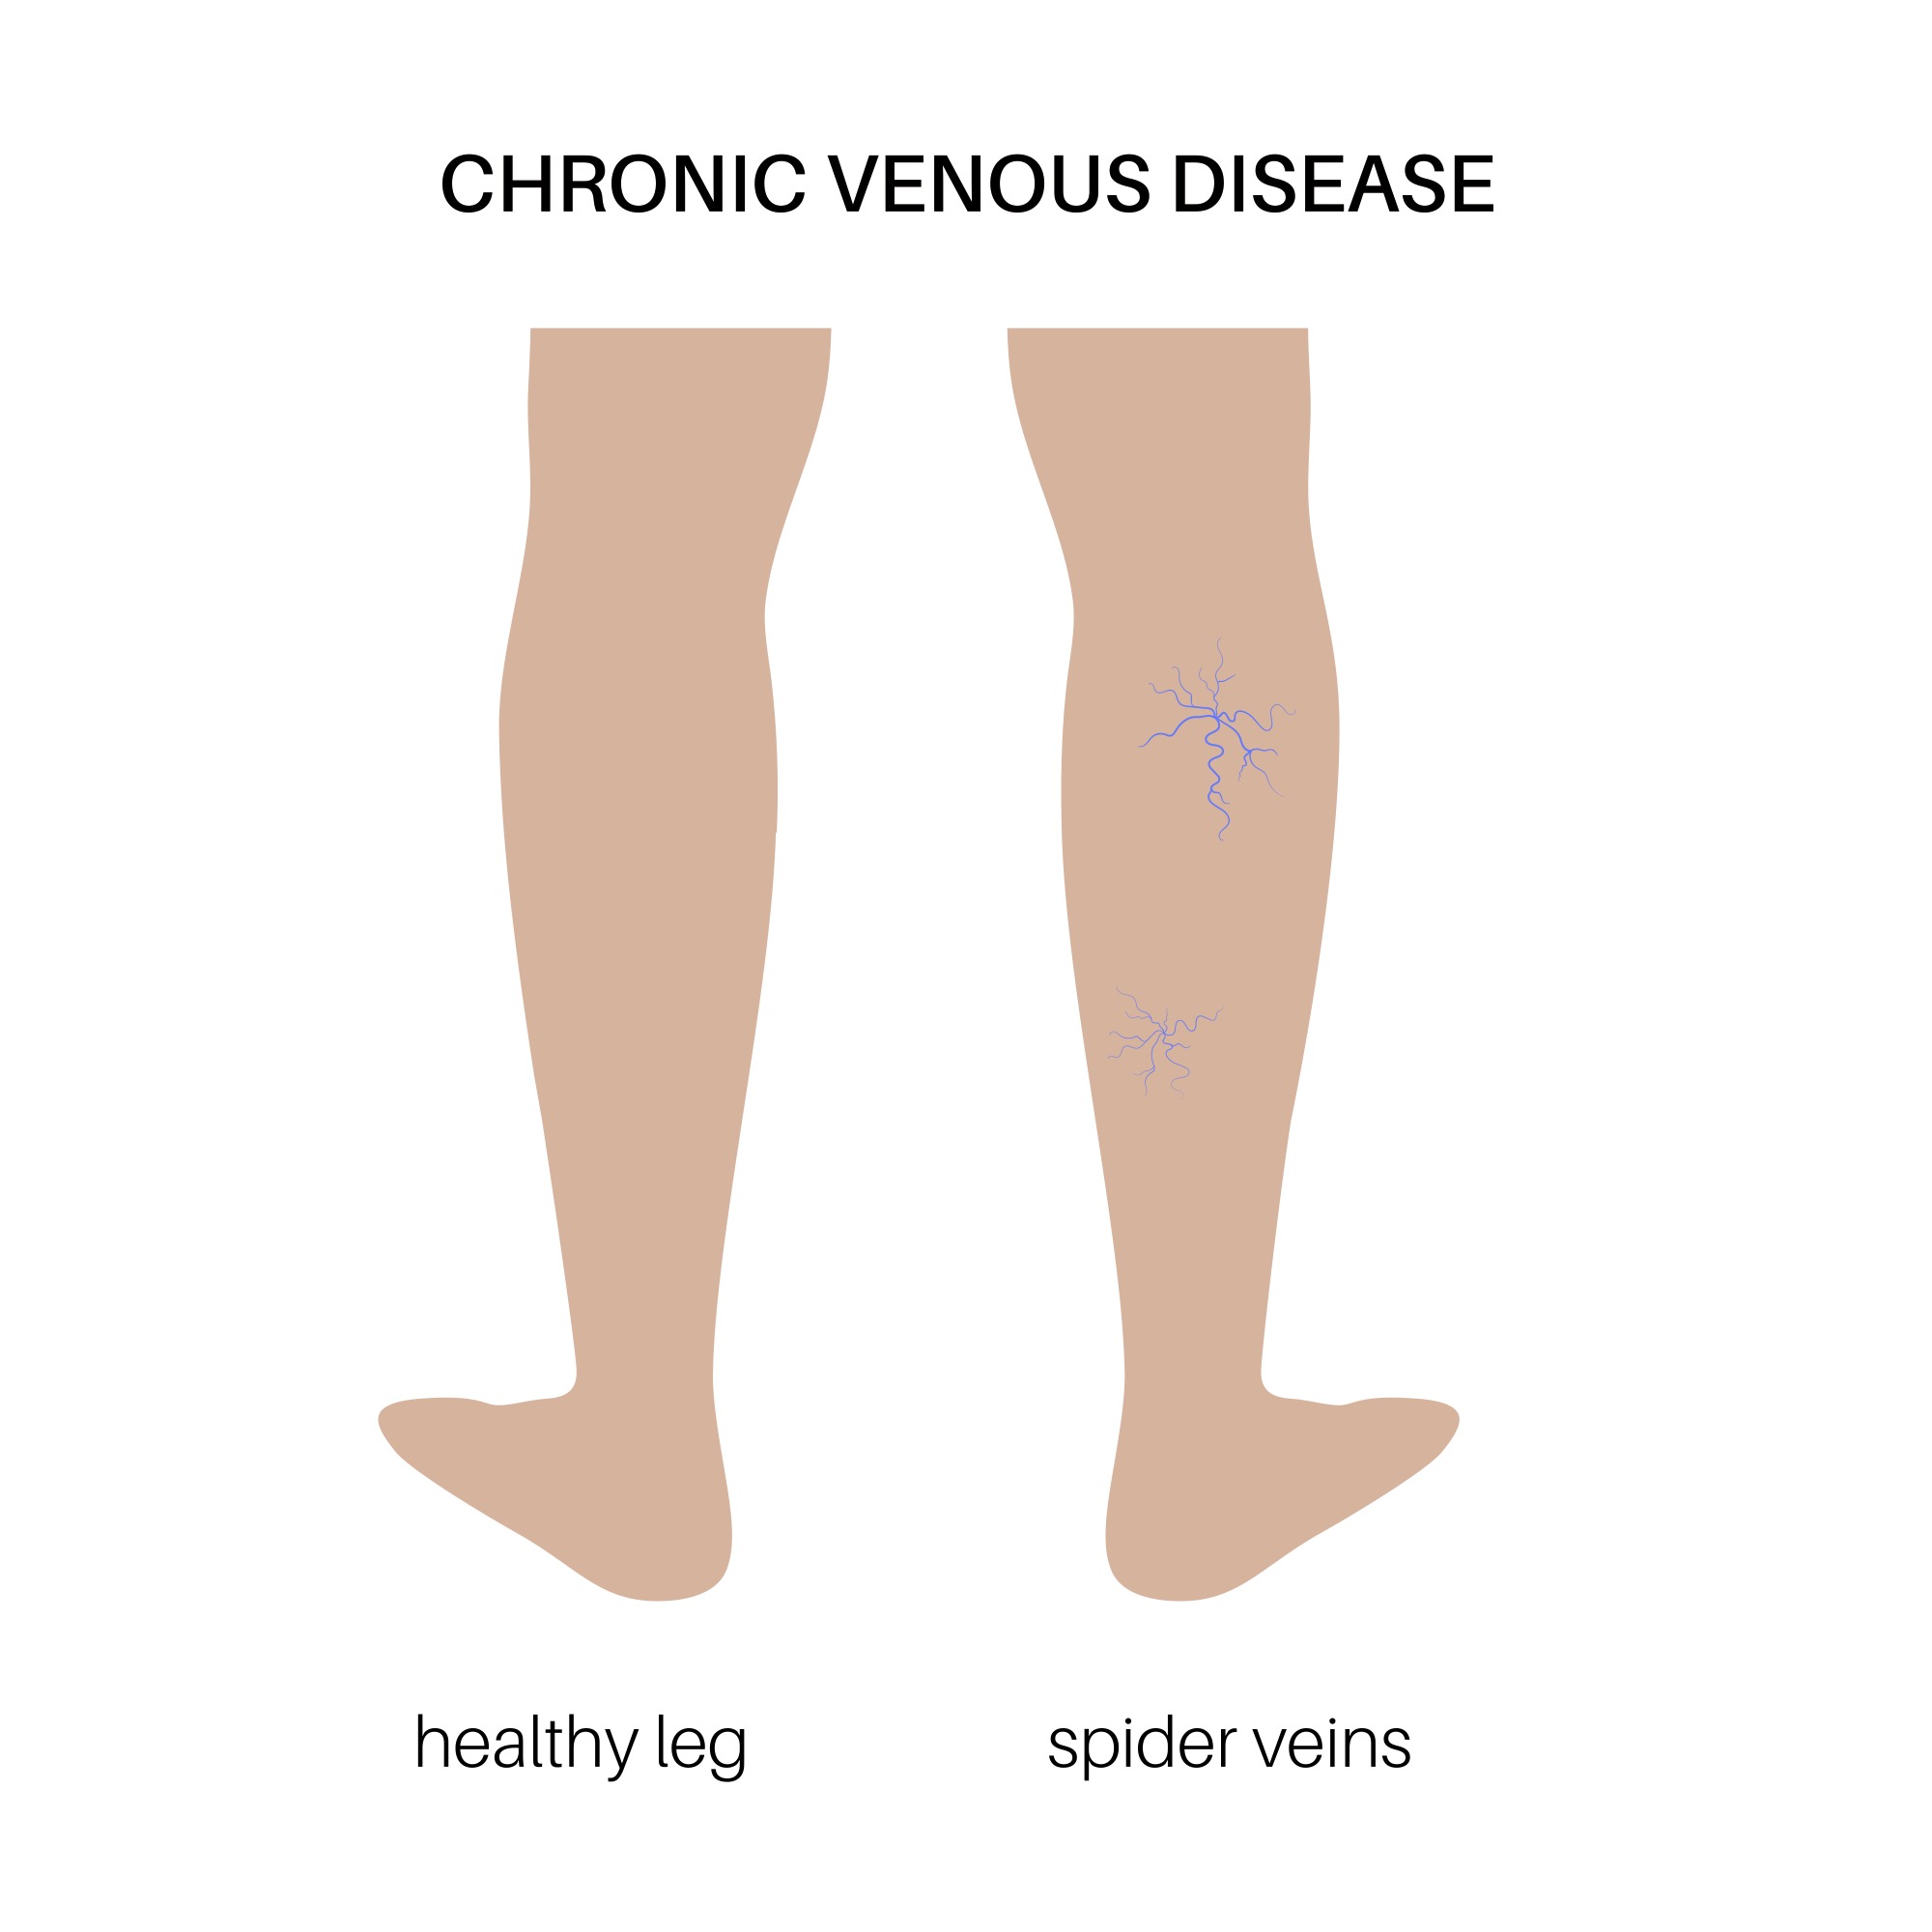 Spider veins vs normal leg veins diagram